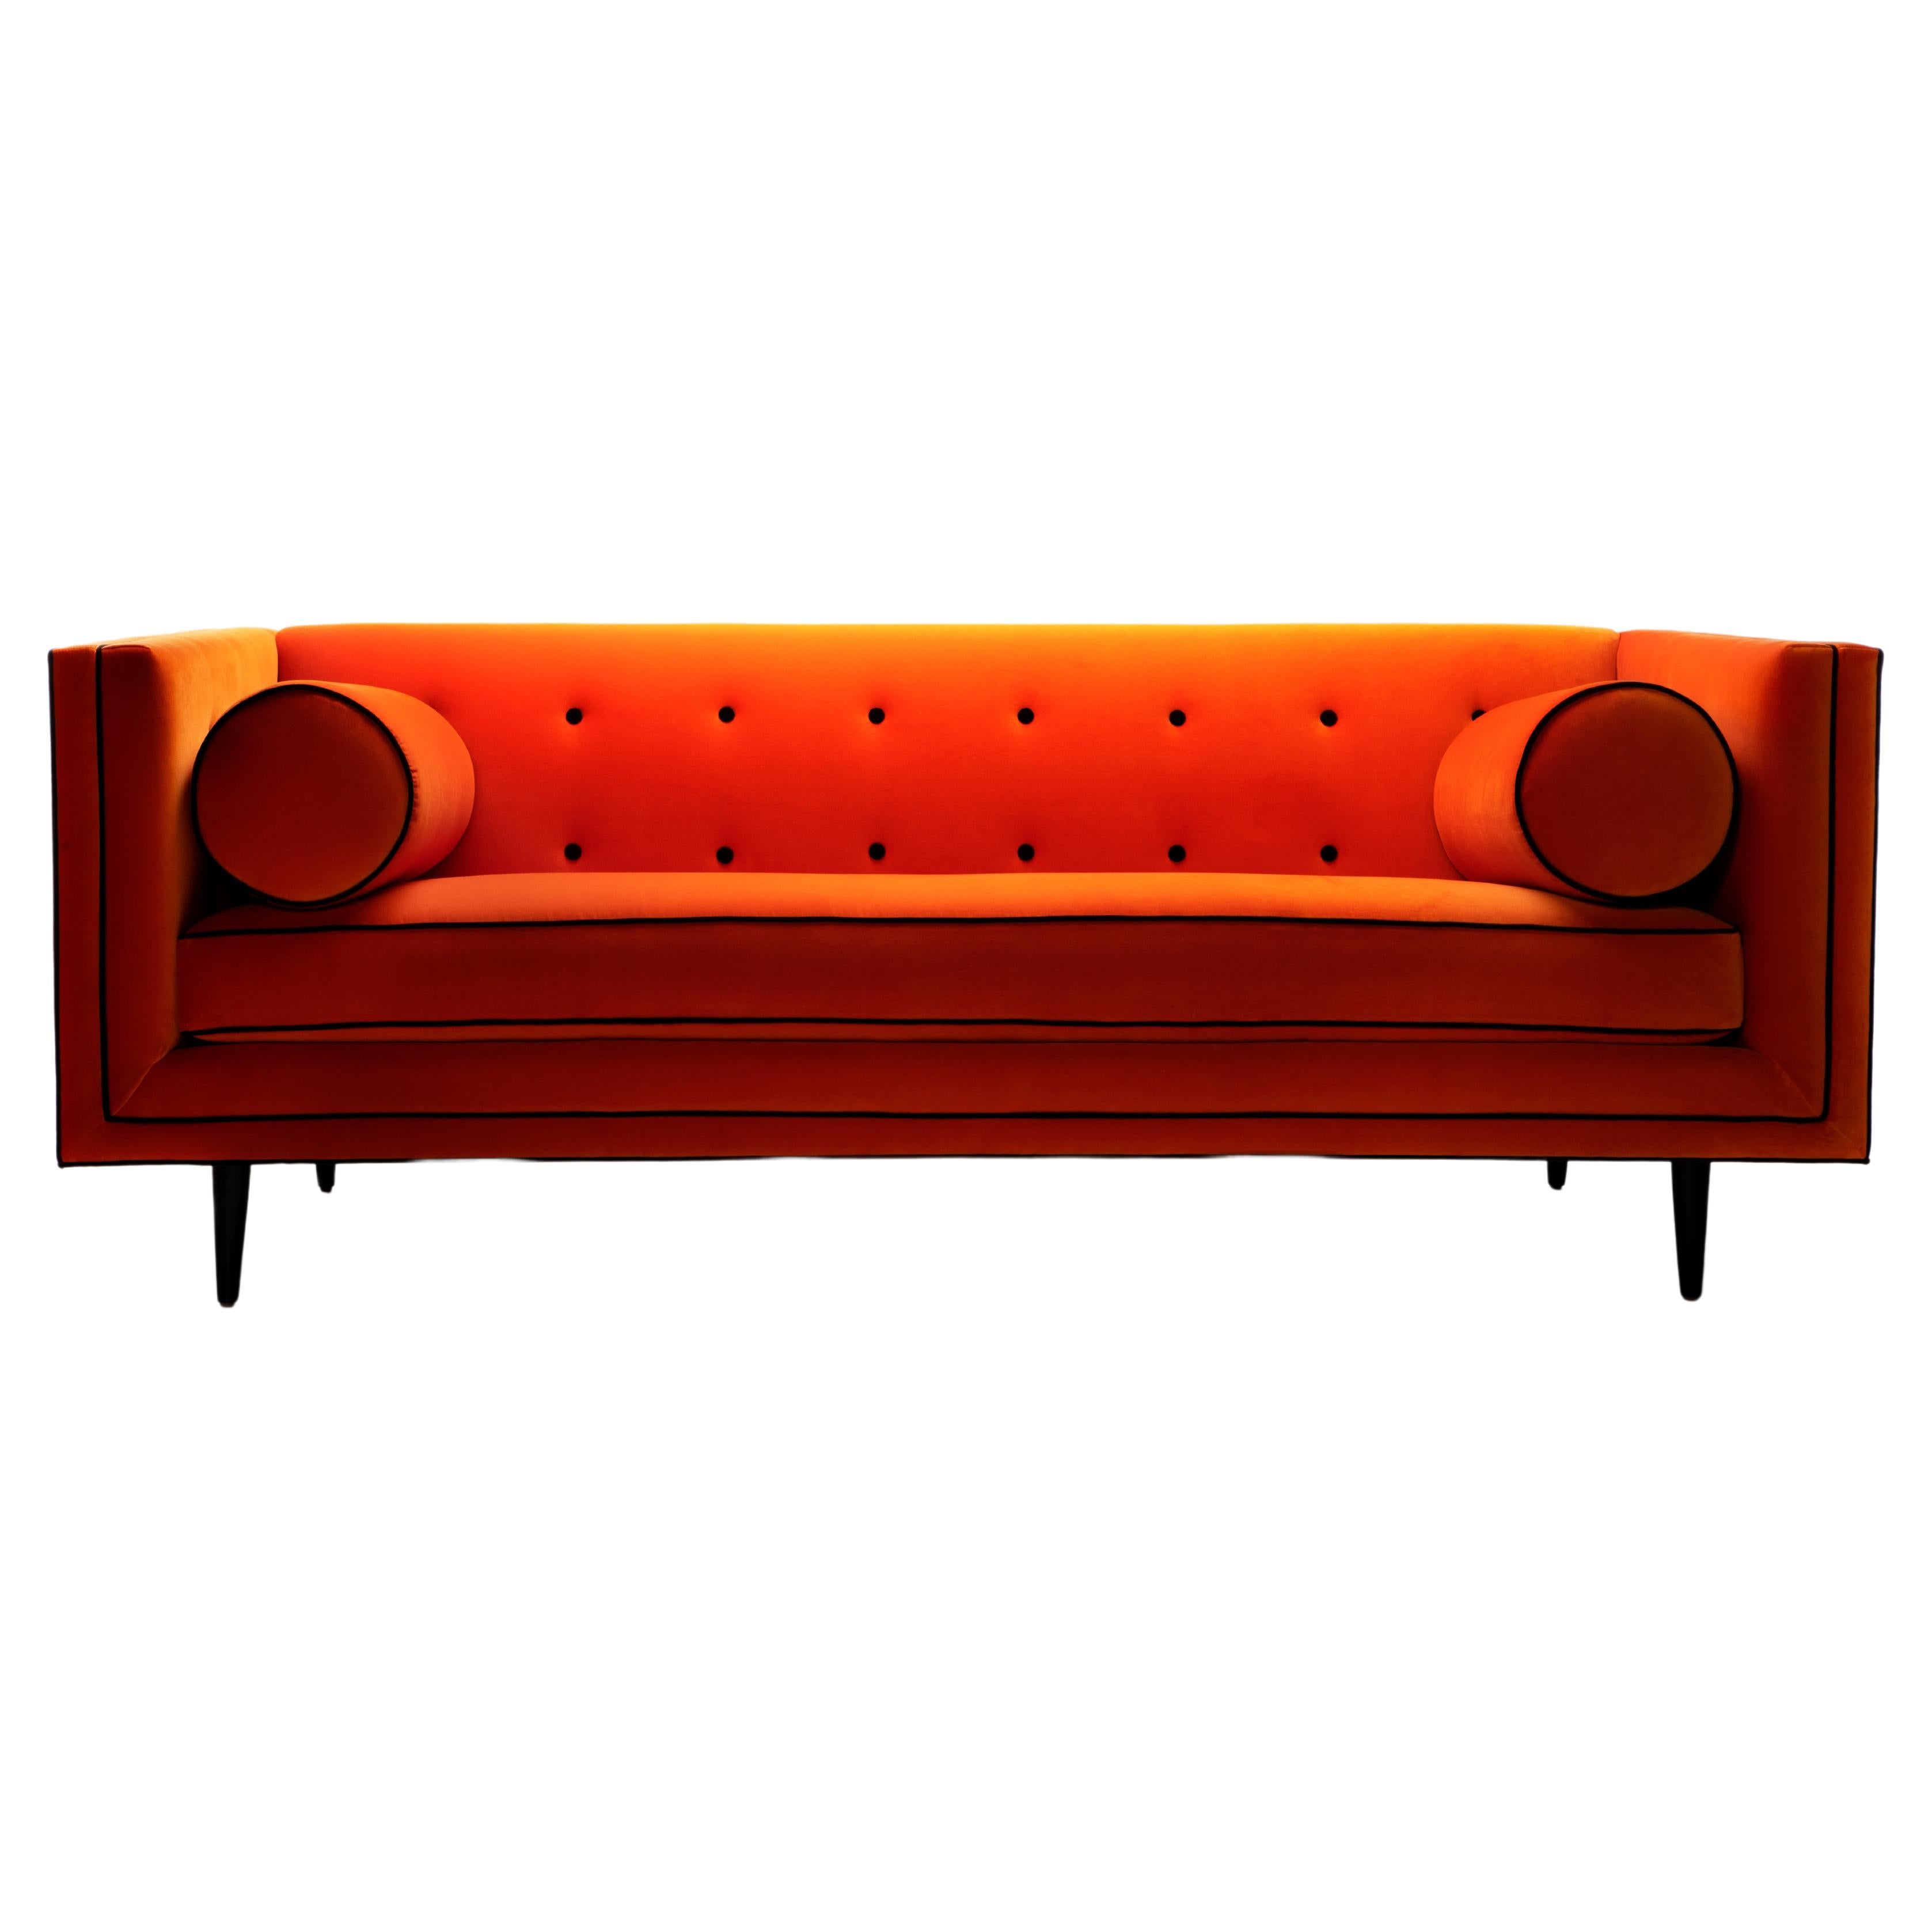 Mid Century Gigi Sofa Hermes Orange Handcrafted by JAMES by Jimmy DeLaurentis